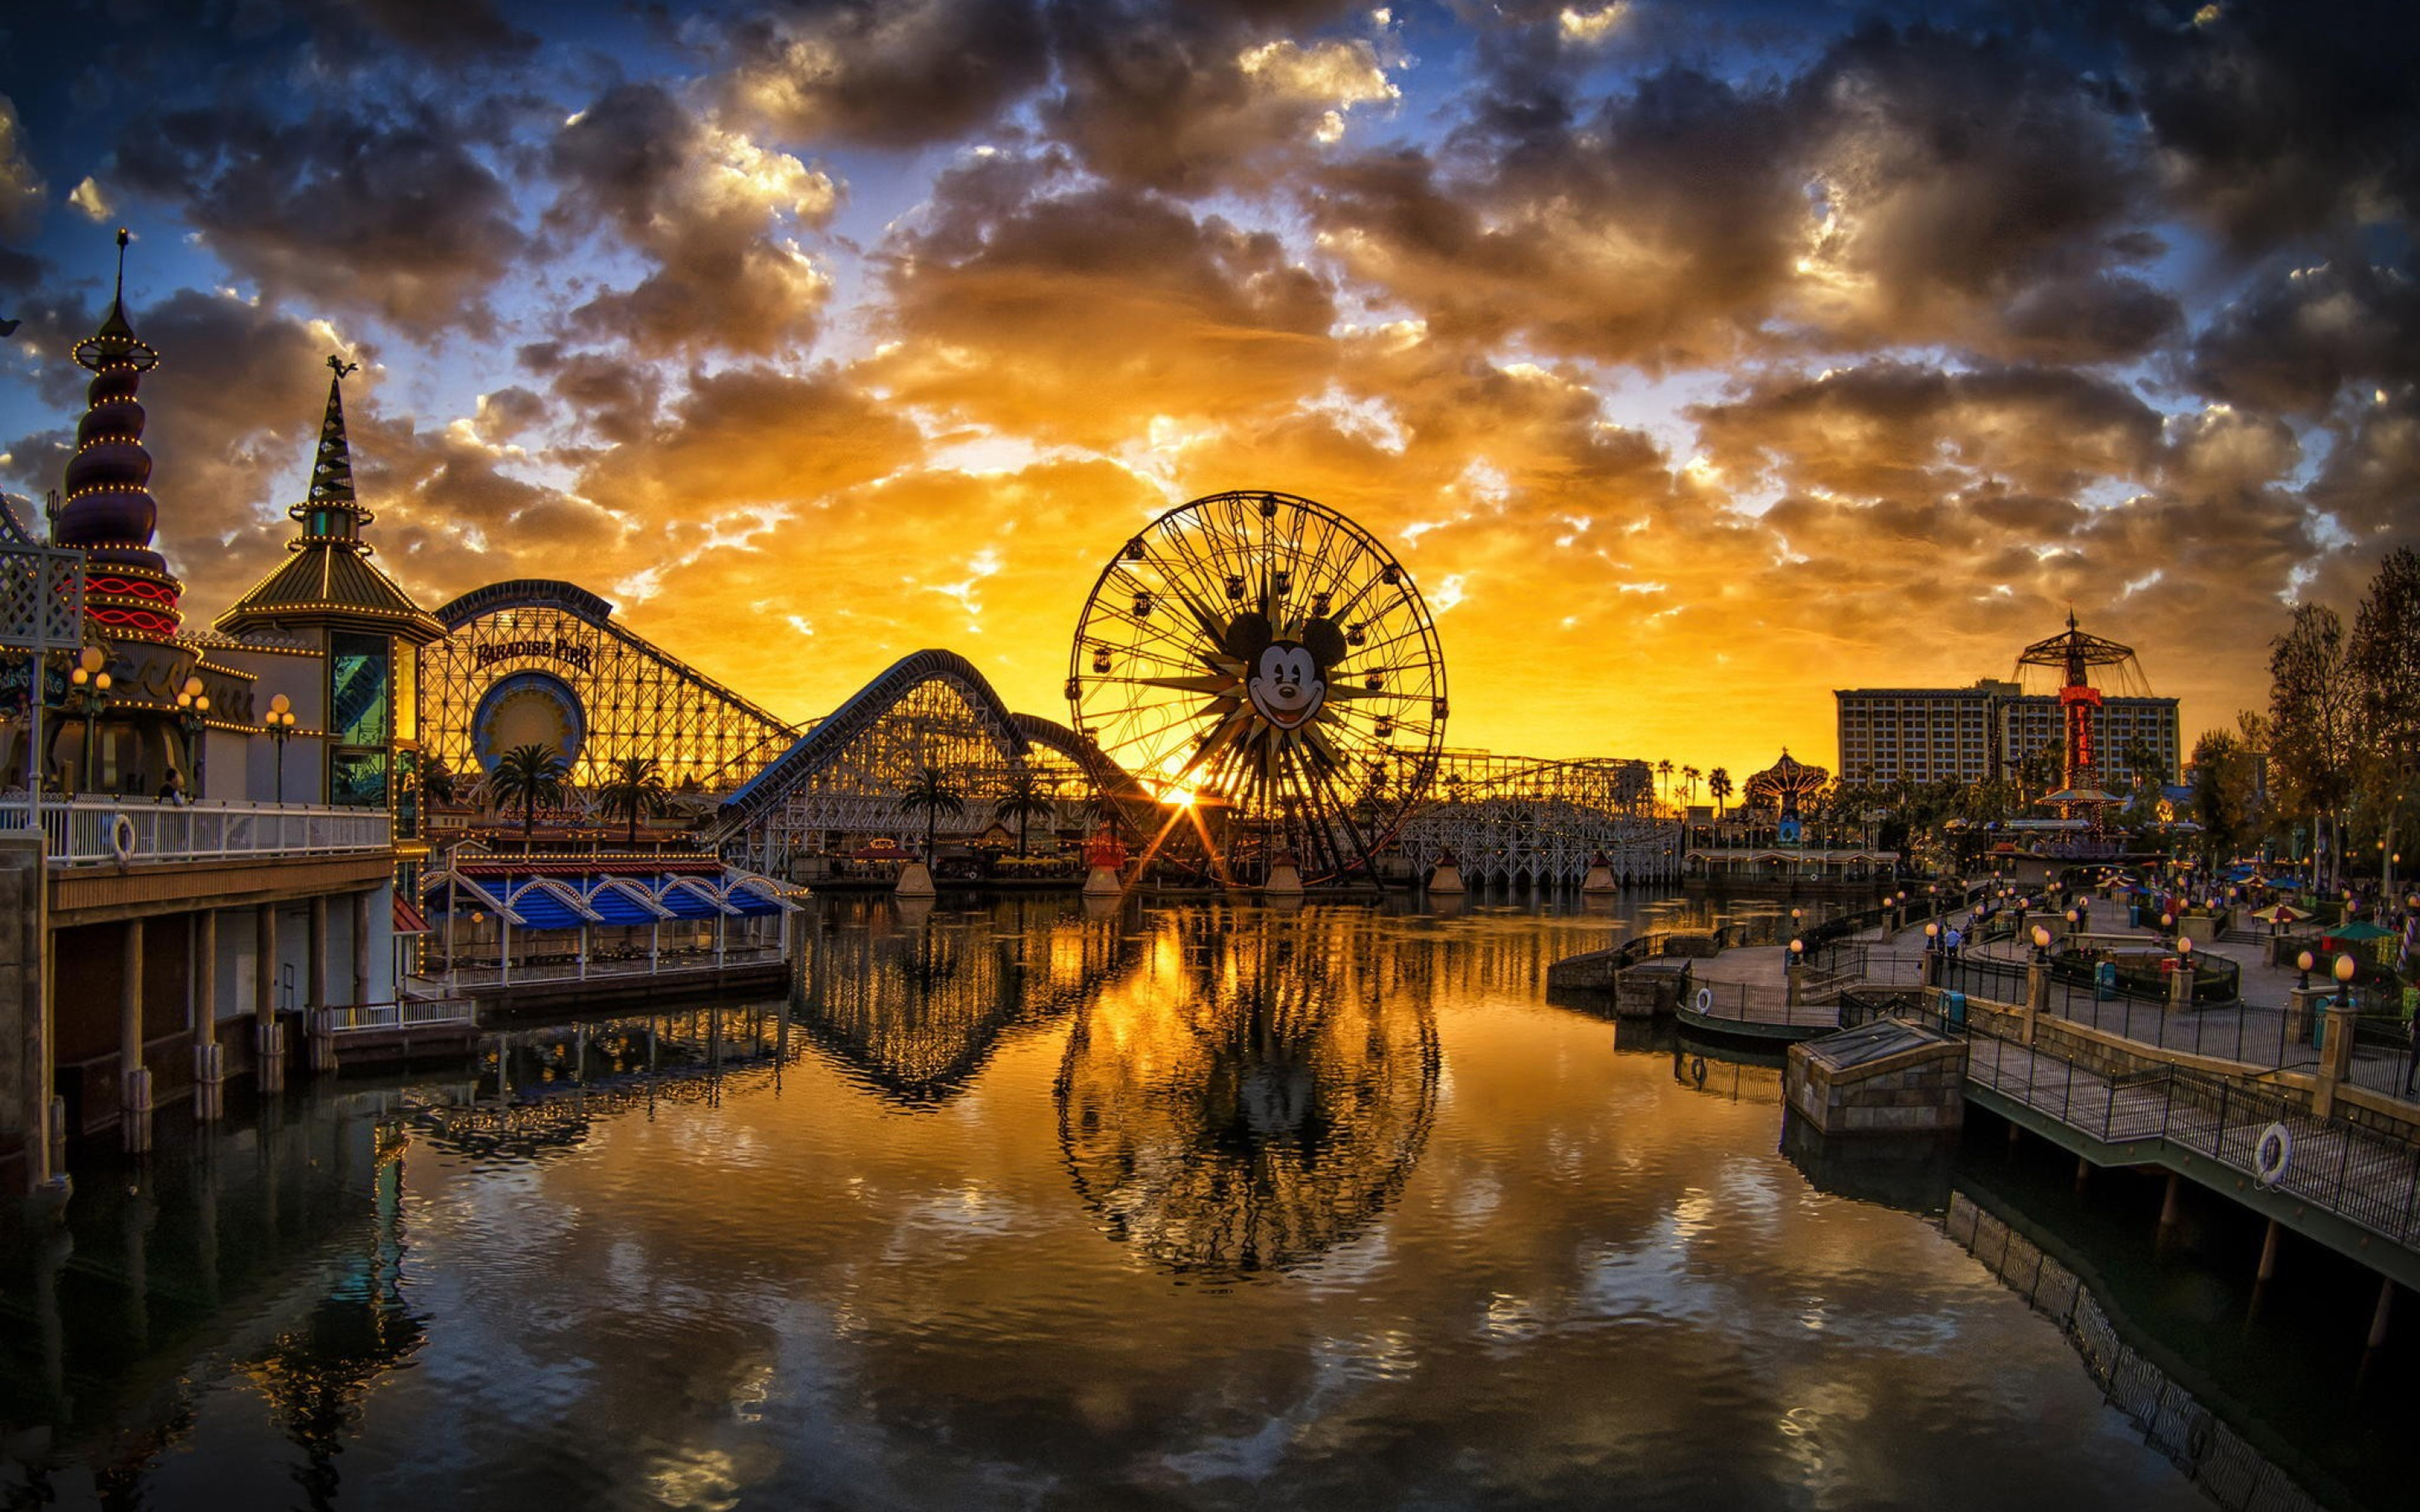 Disneyland California Sunset City River Ferris Wheel Reflection Pier Hd